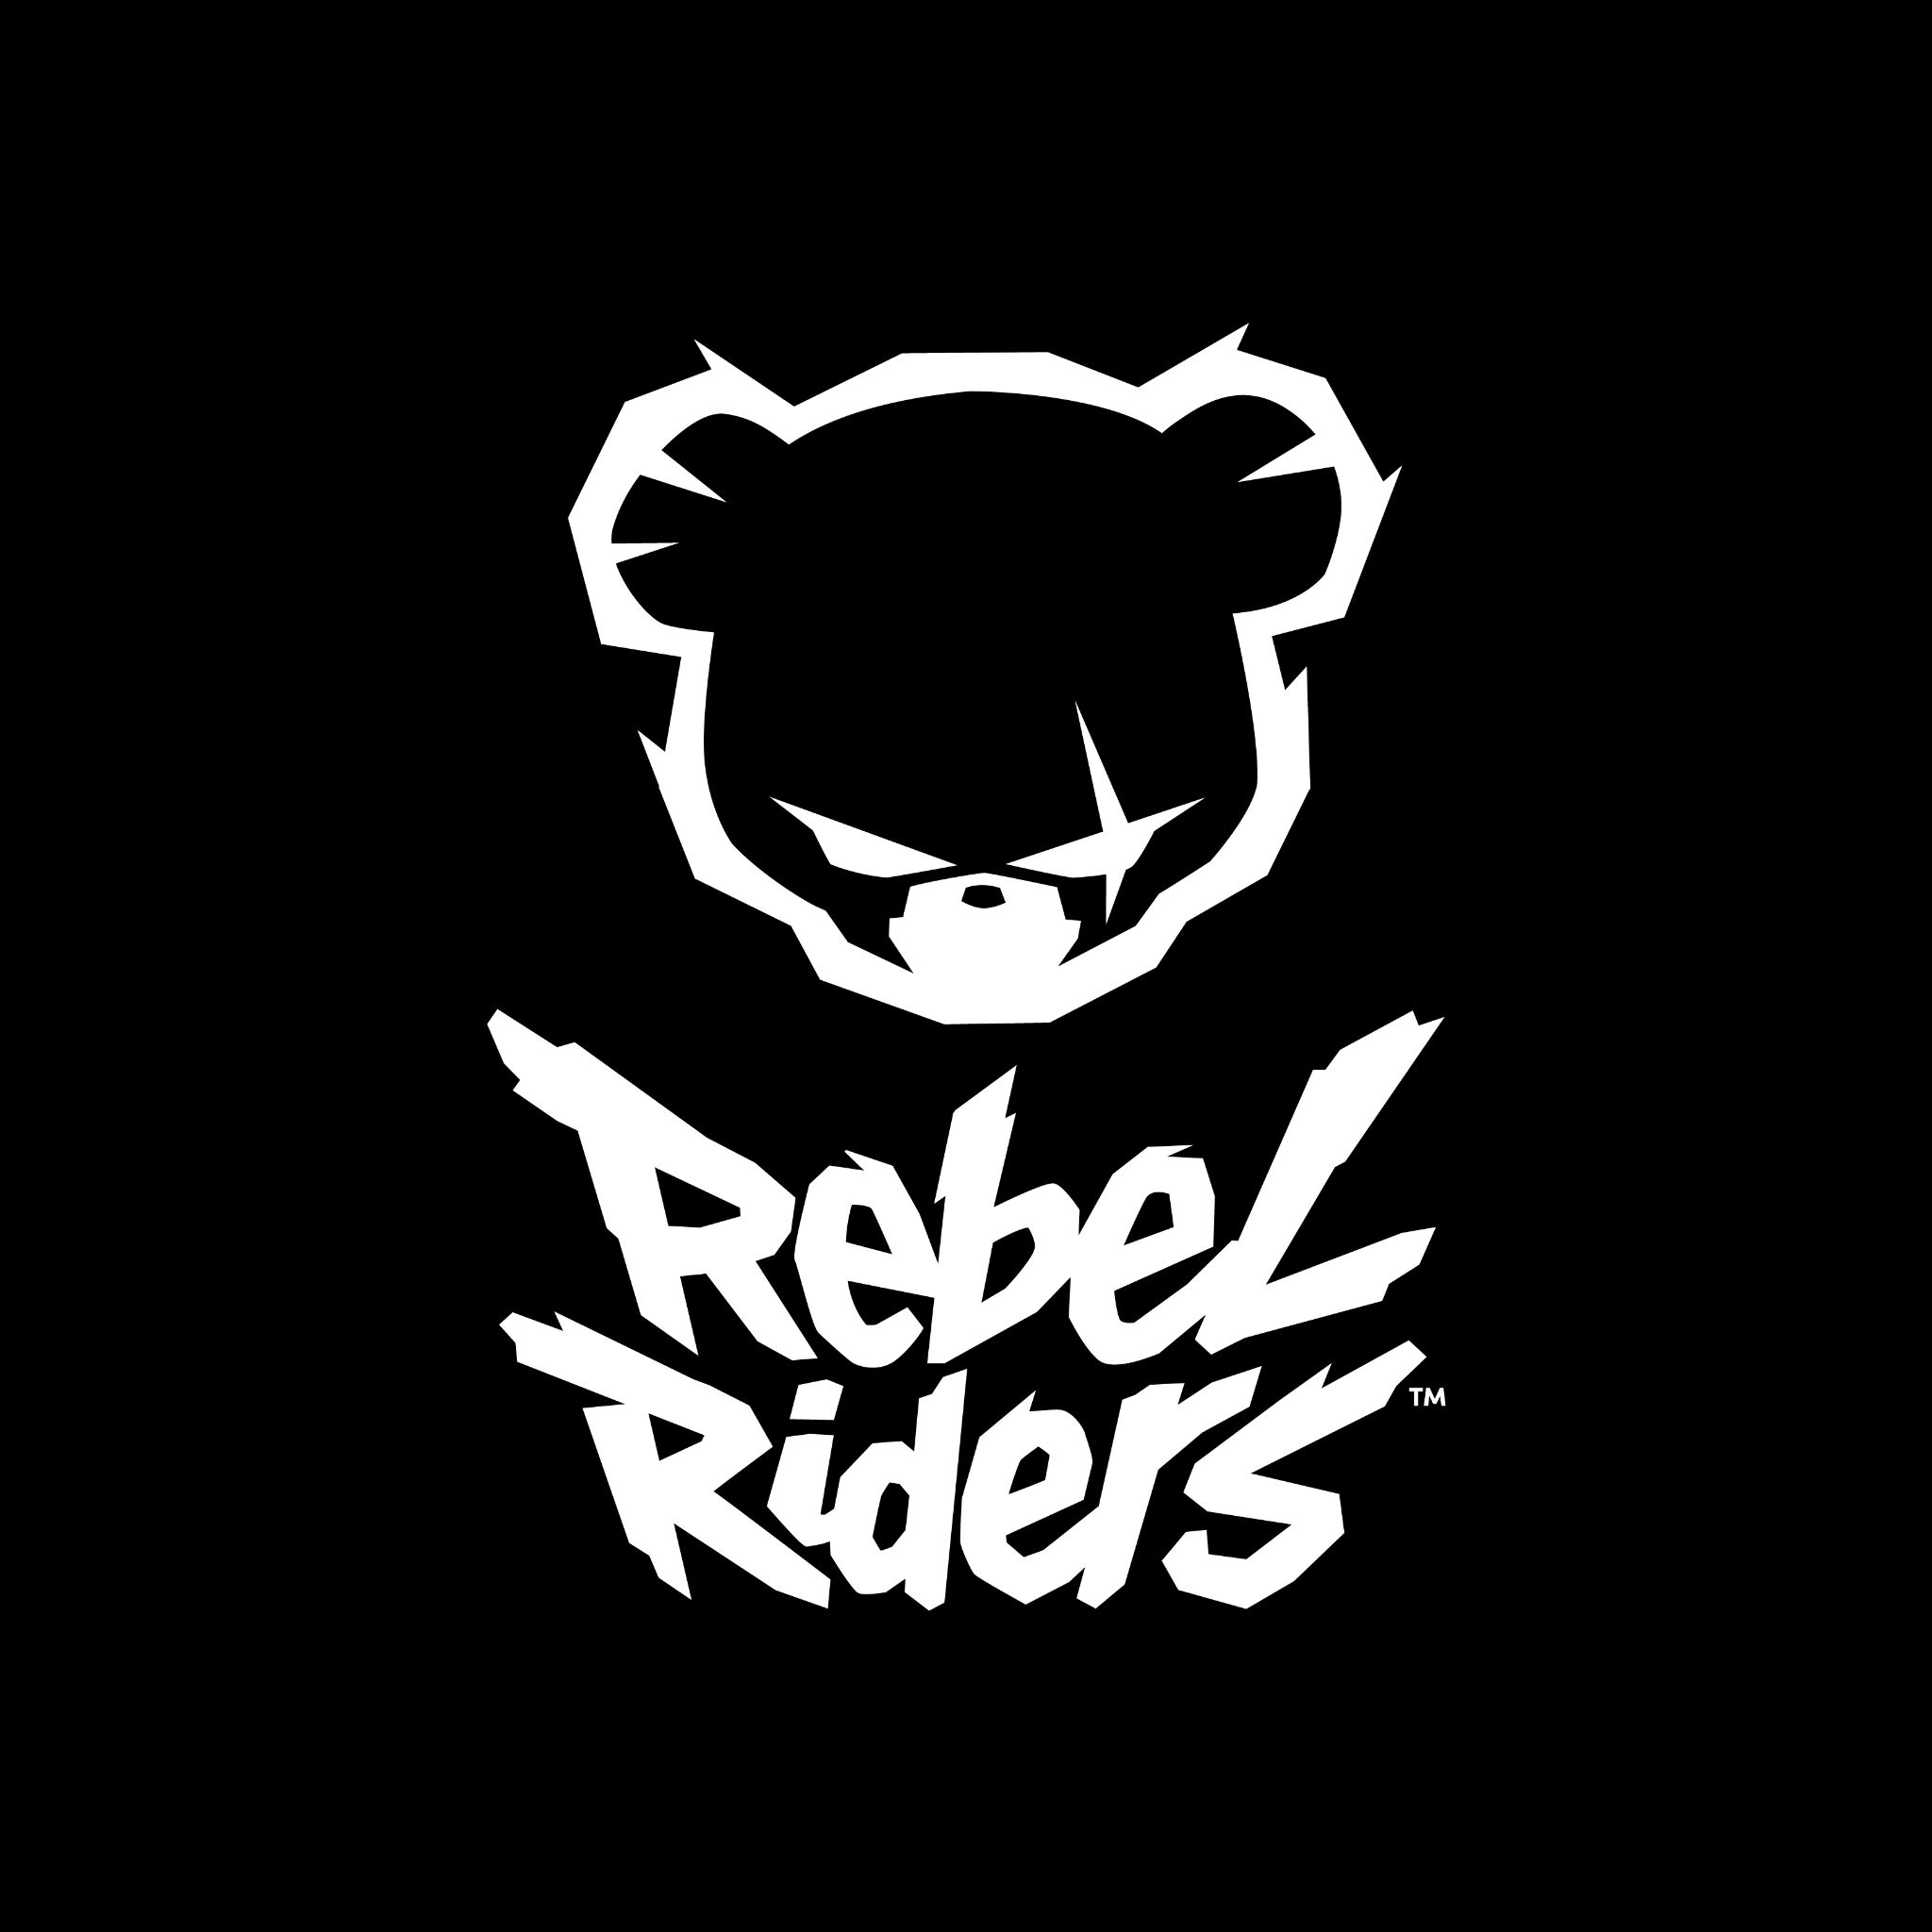 nico mas - King - Rebel Riders